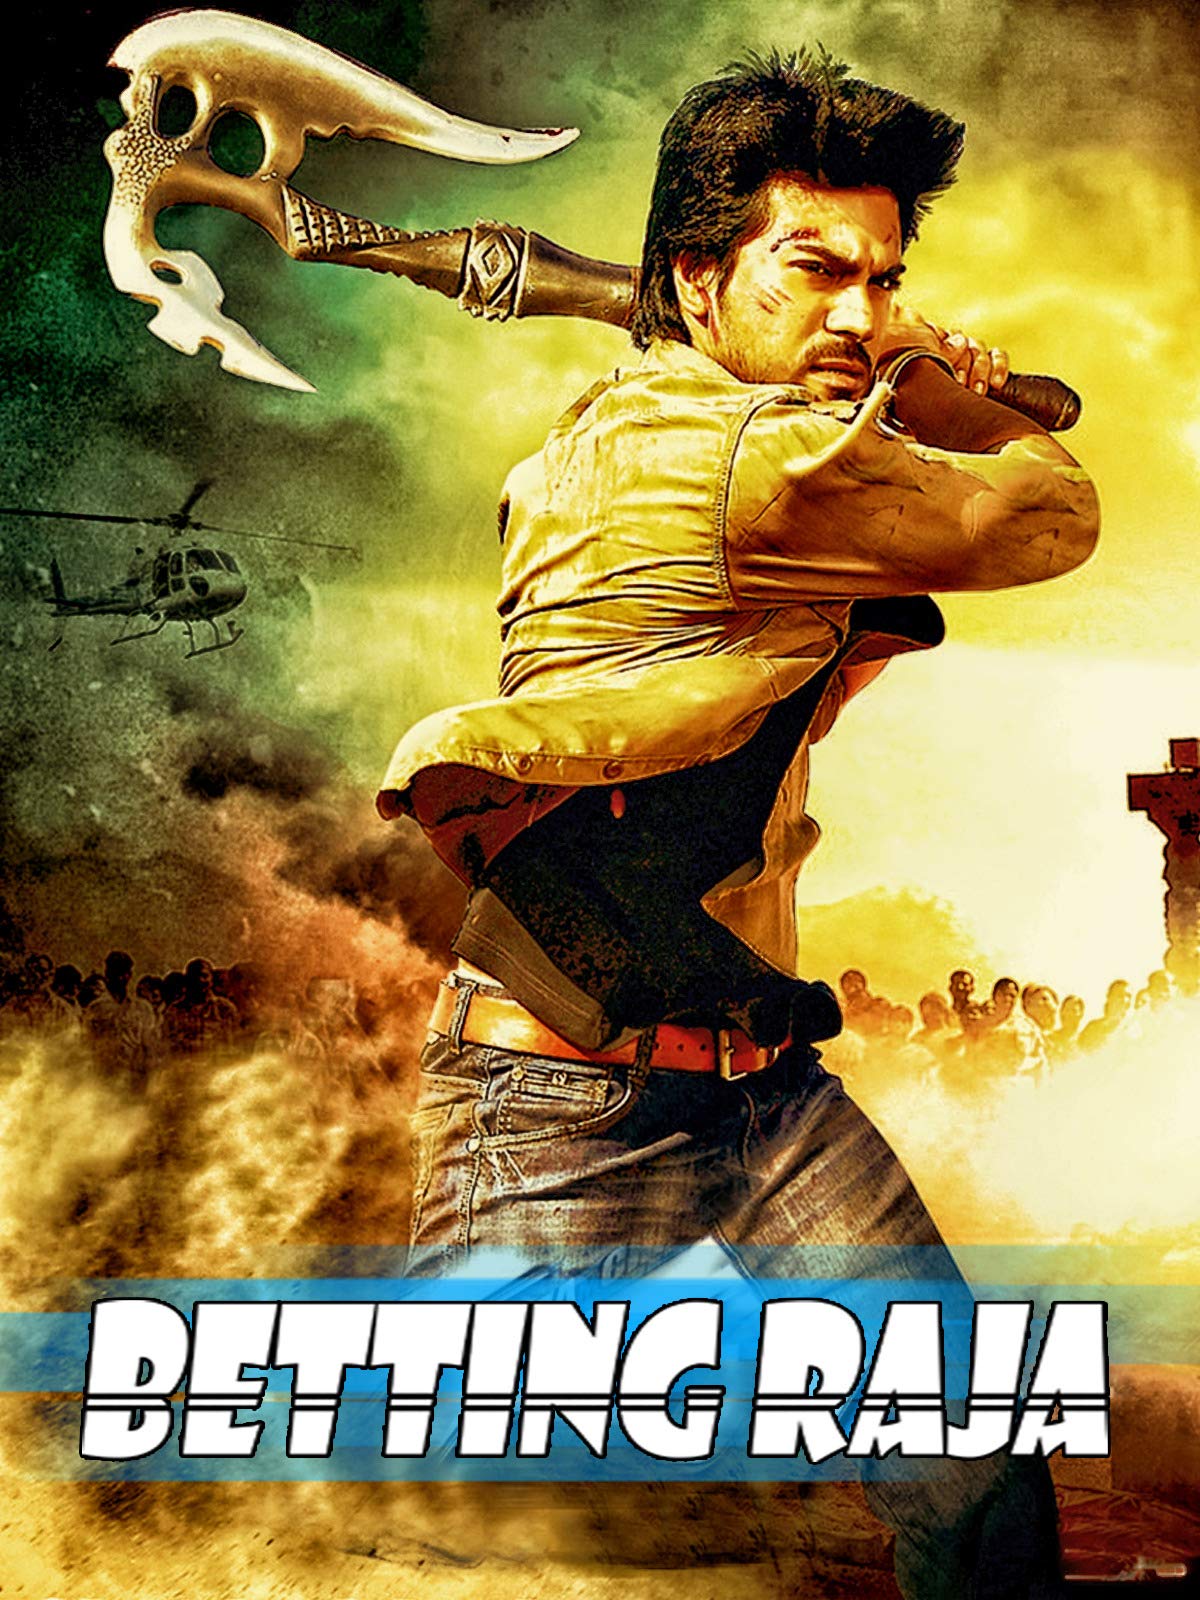 Racha (Betting Raja) 2012 Hindi ORG Dual Audio 1080p | 720p | 480p BluRay ESub Download